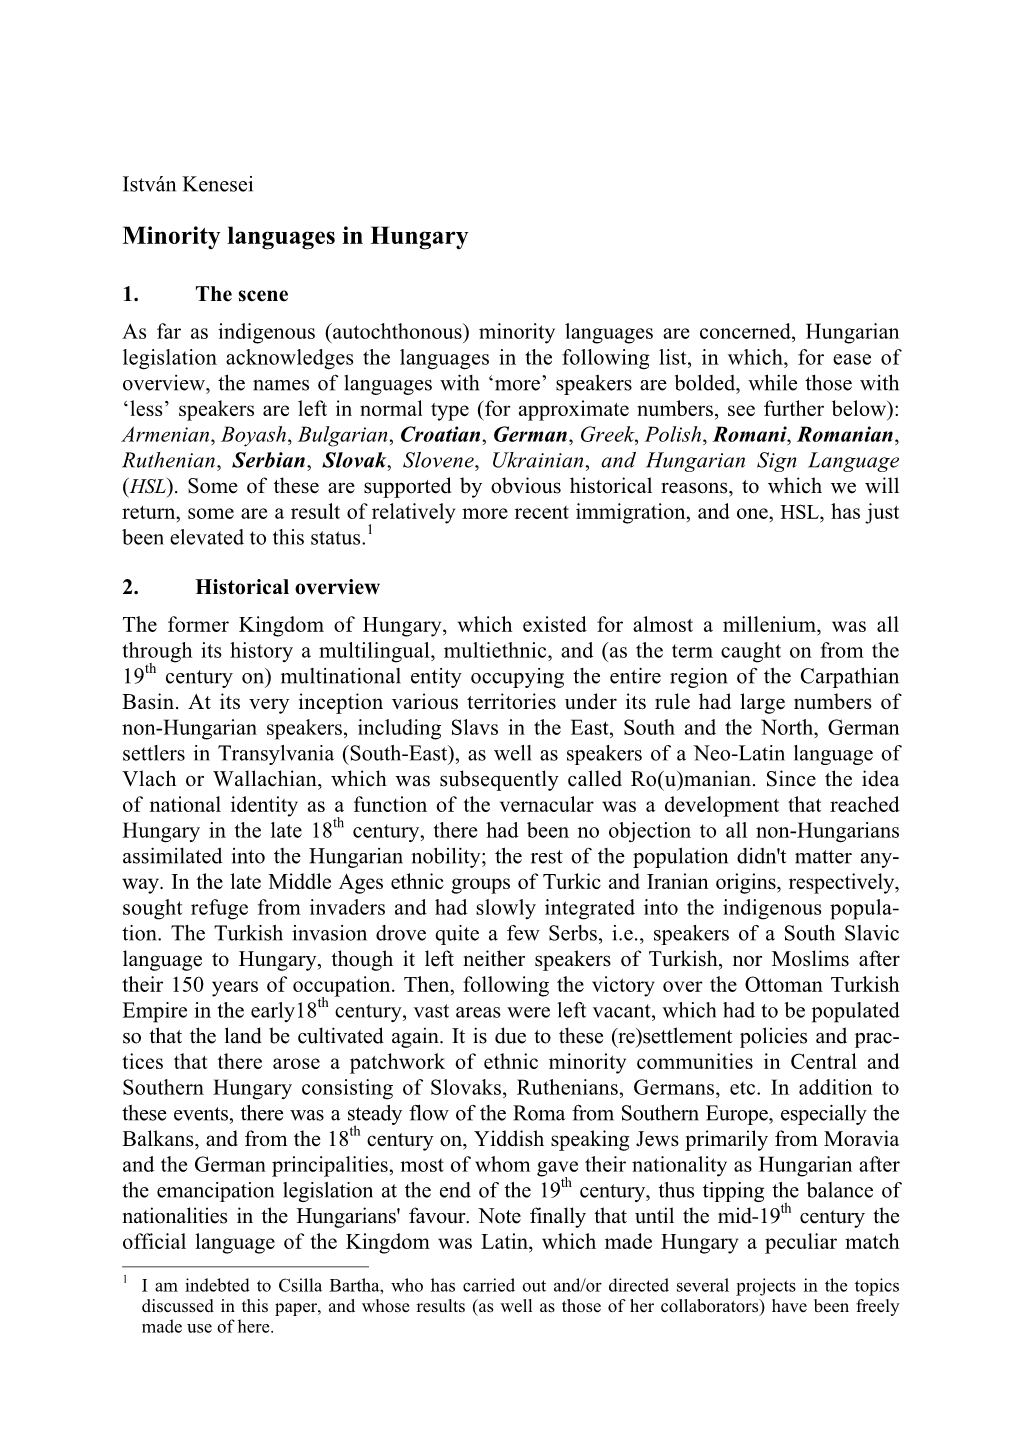 Minority Languages in Hungary